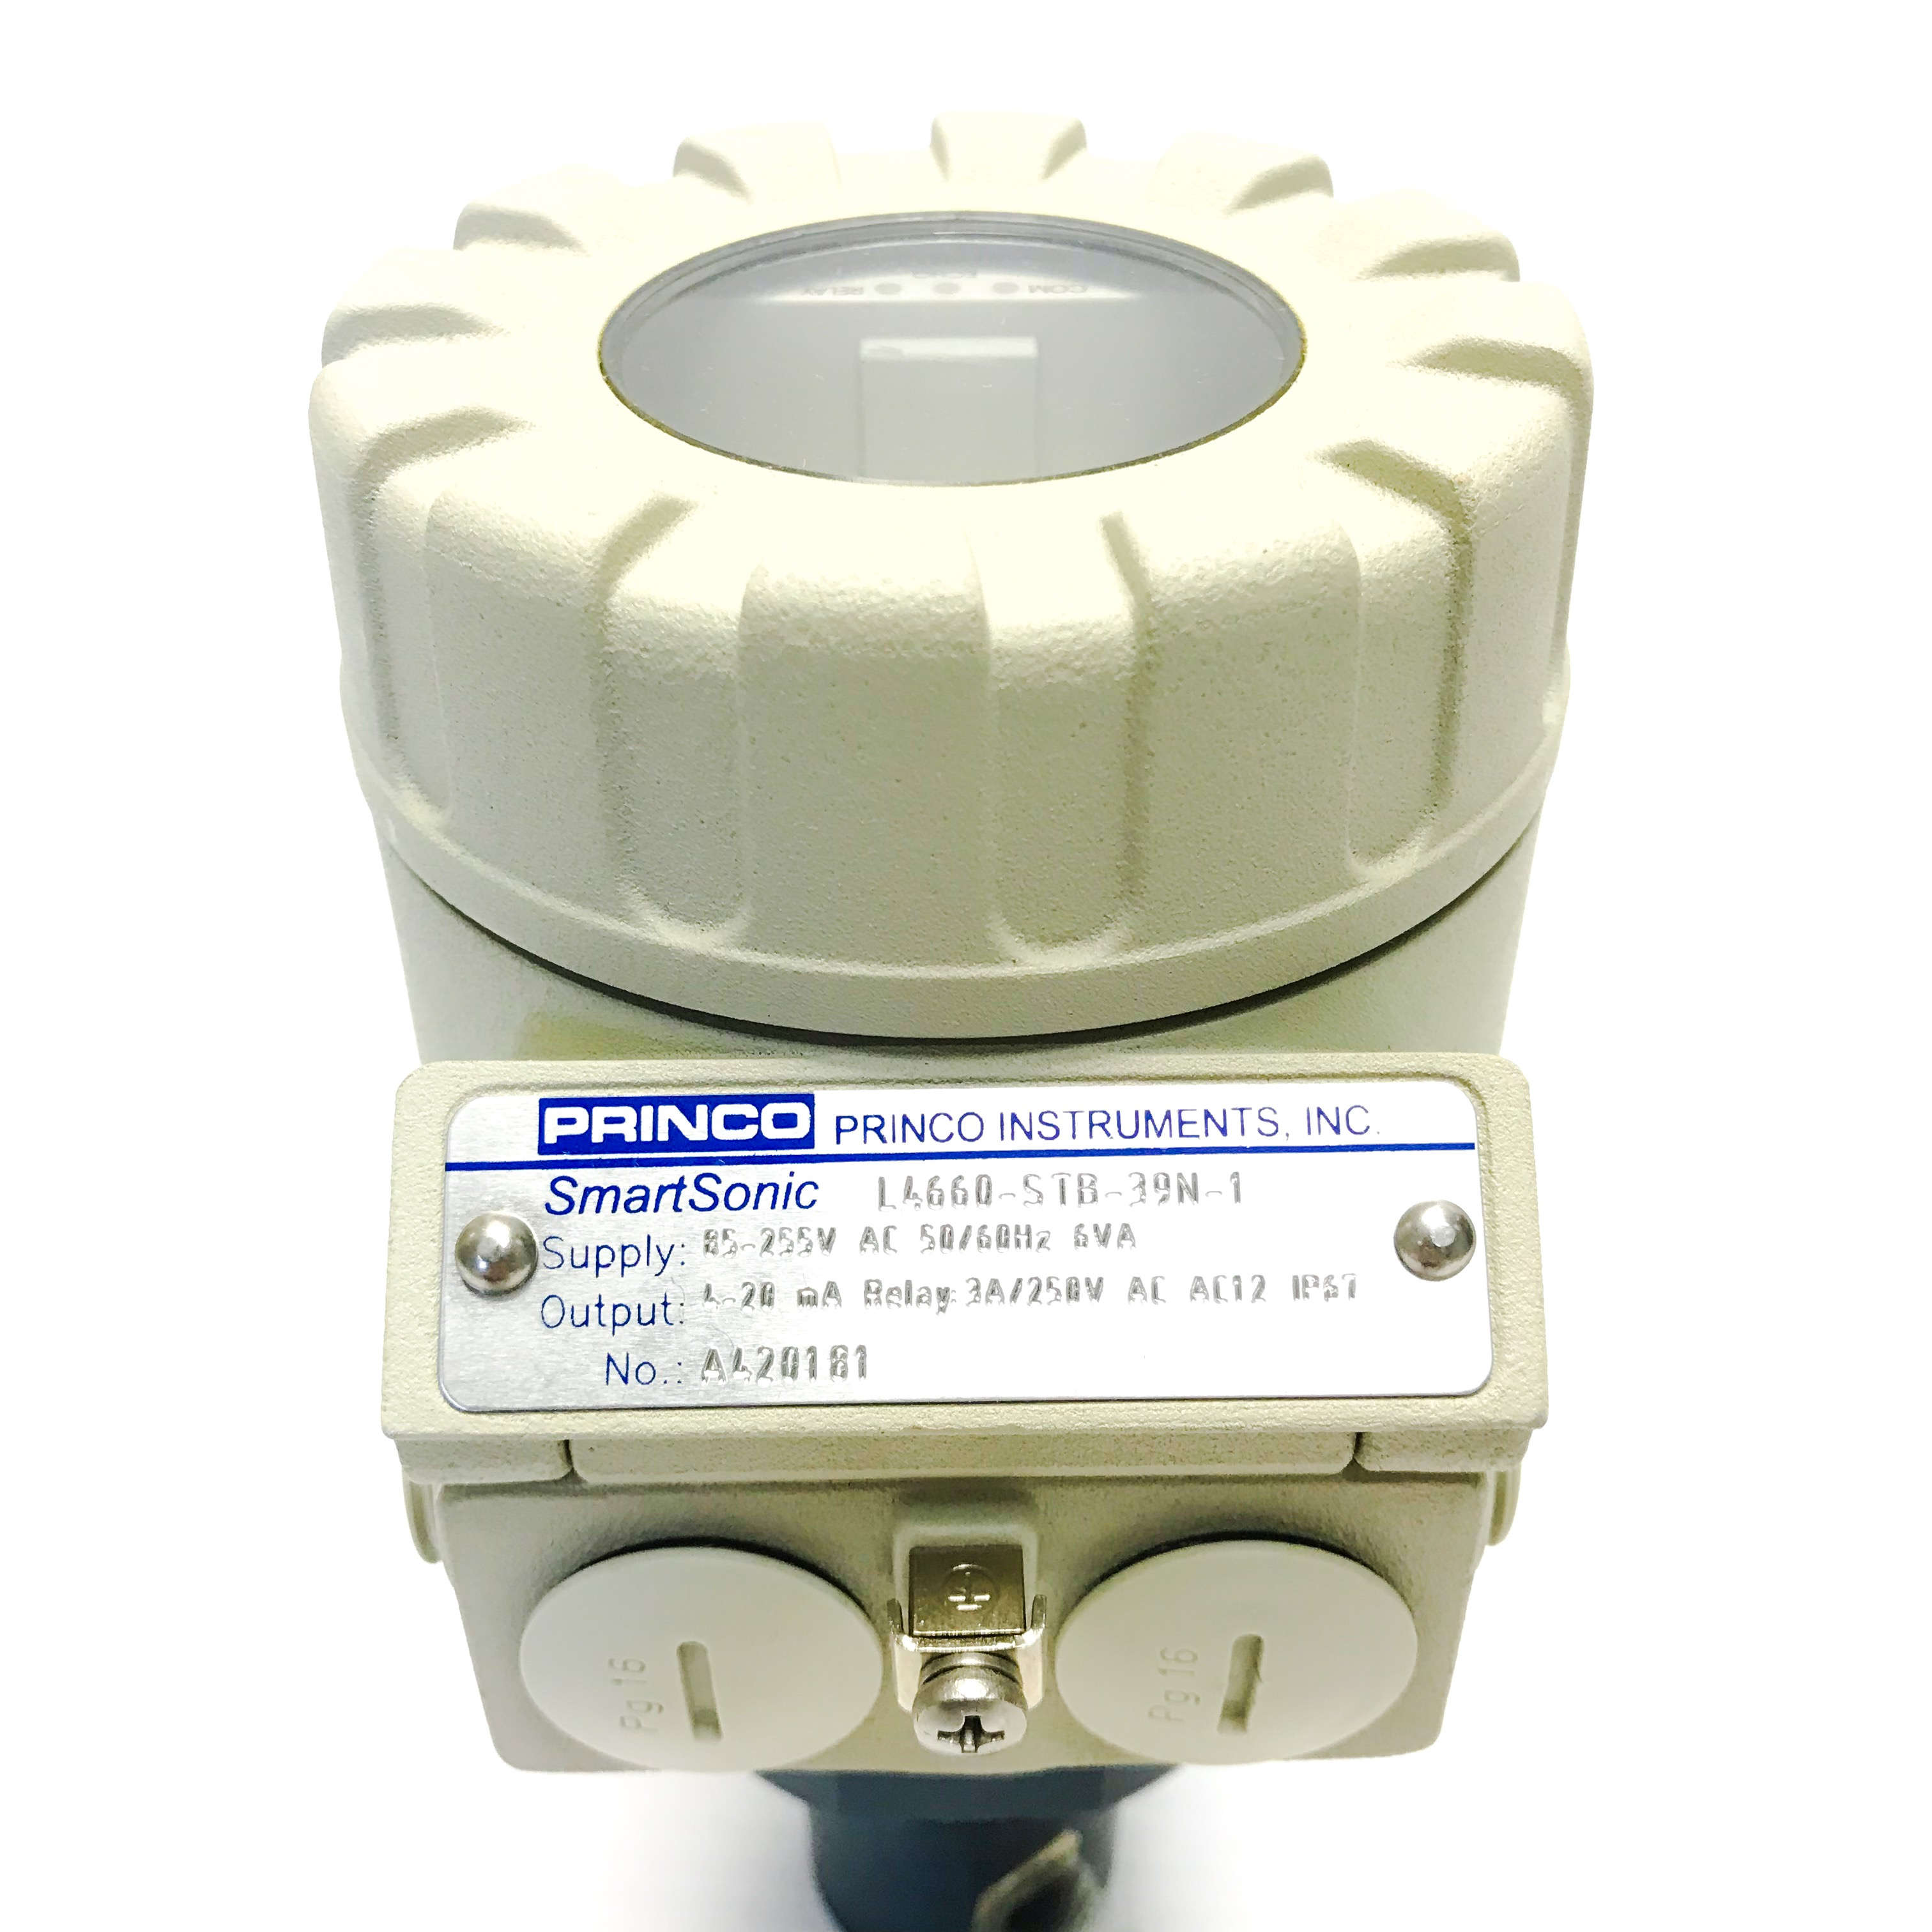 L4660-STB-39N-1 Princo Level Sensor 2